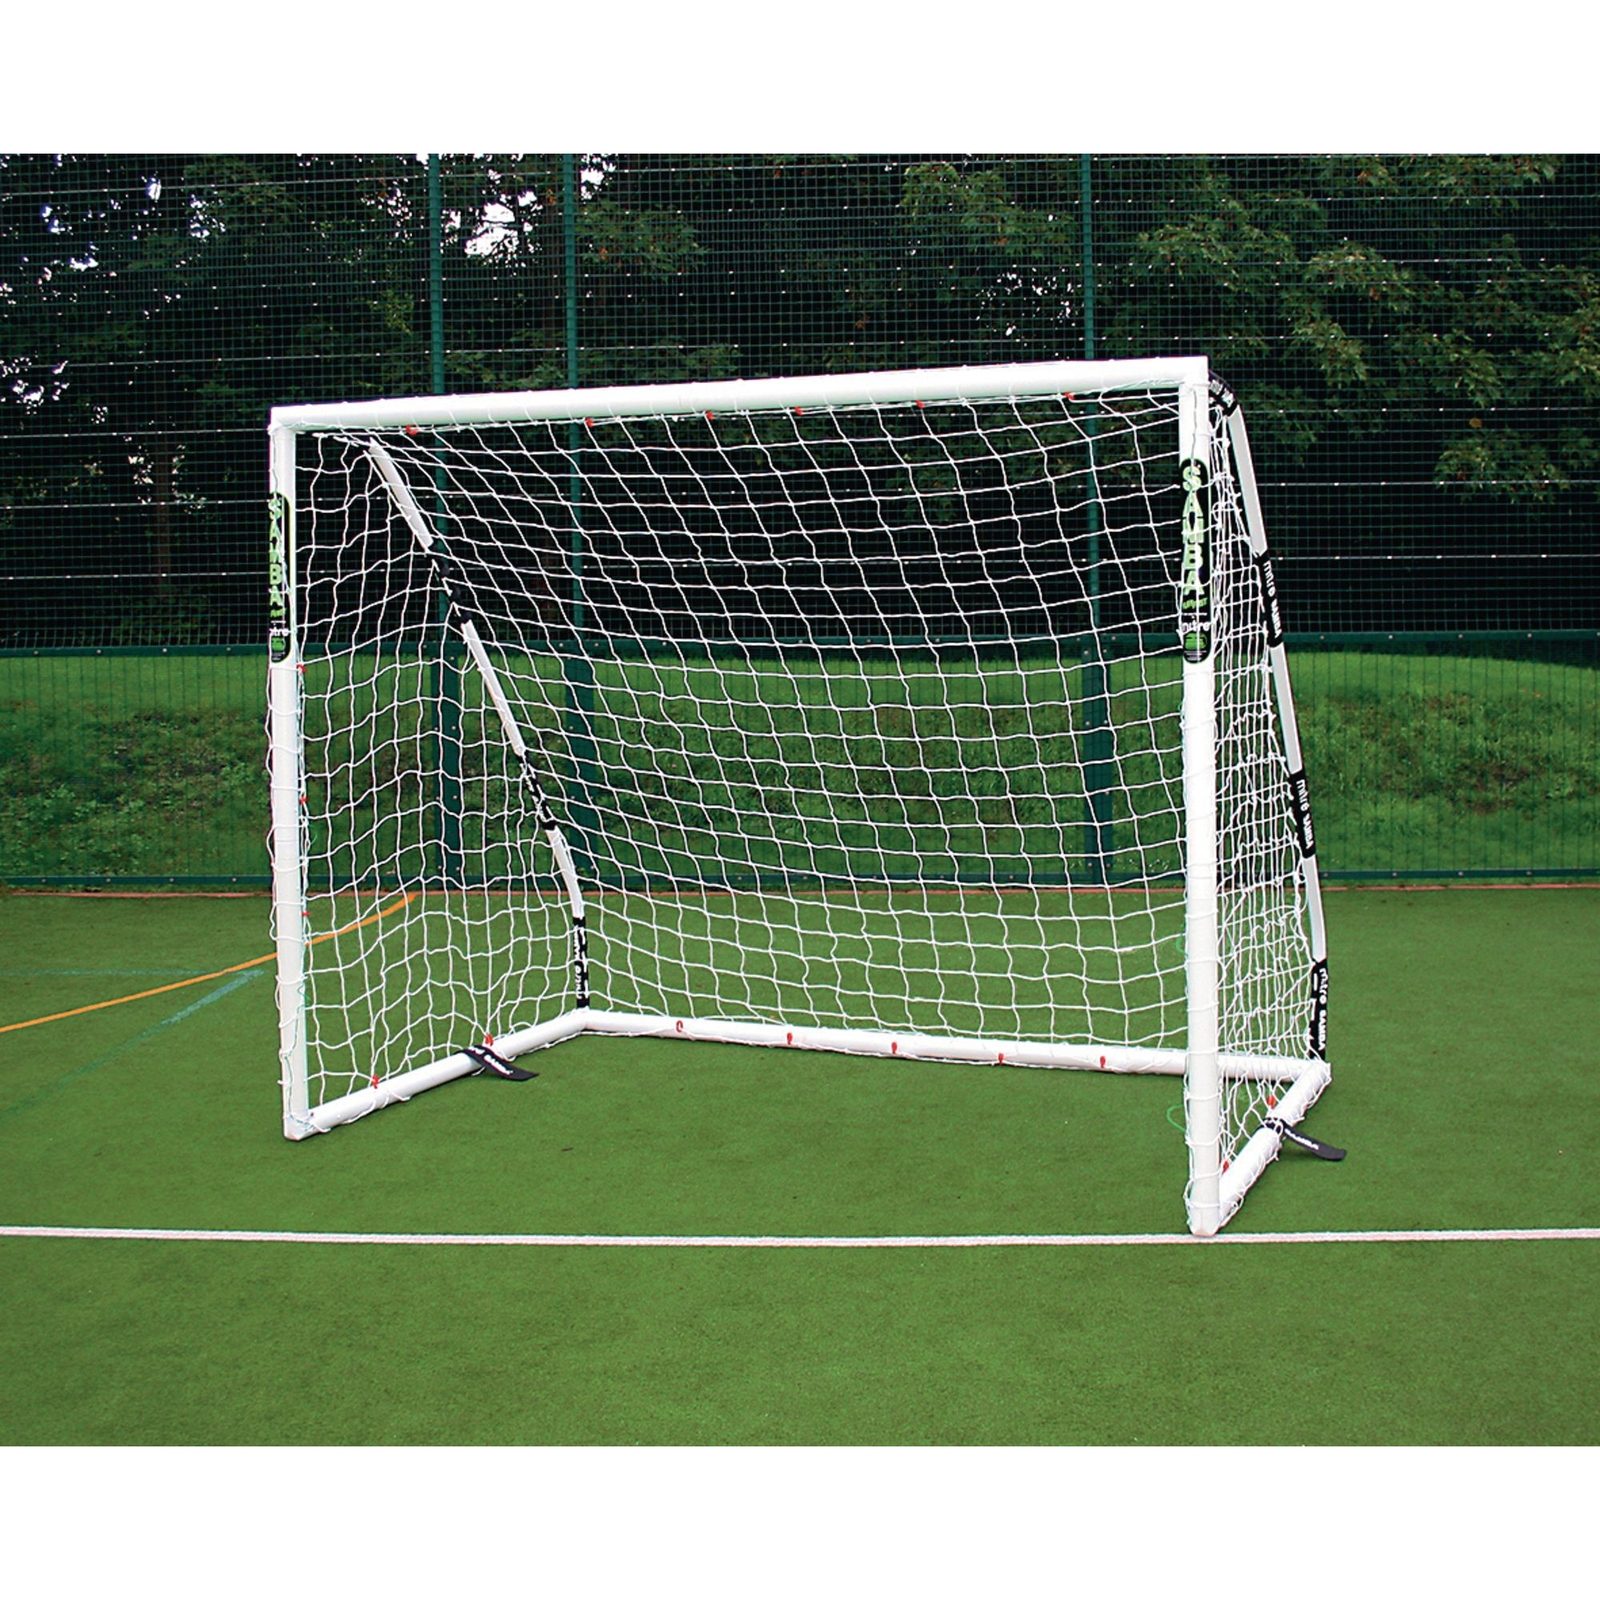 Samba Mitre PlayFast Match Goal - 8ft x 6ft